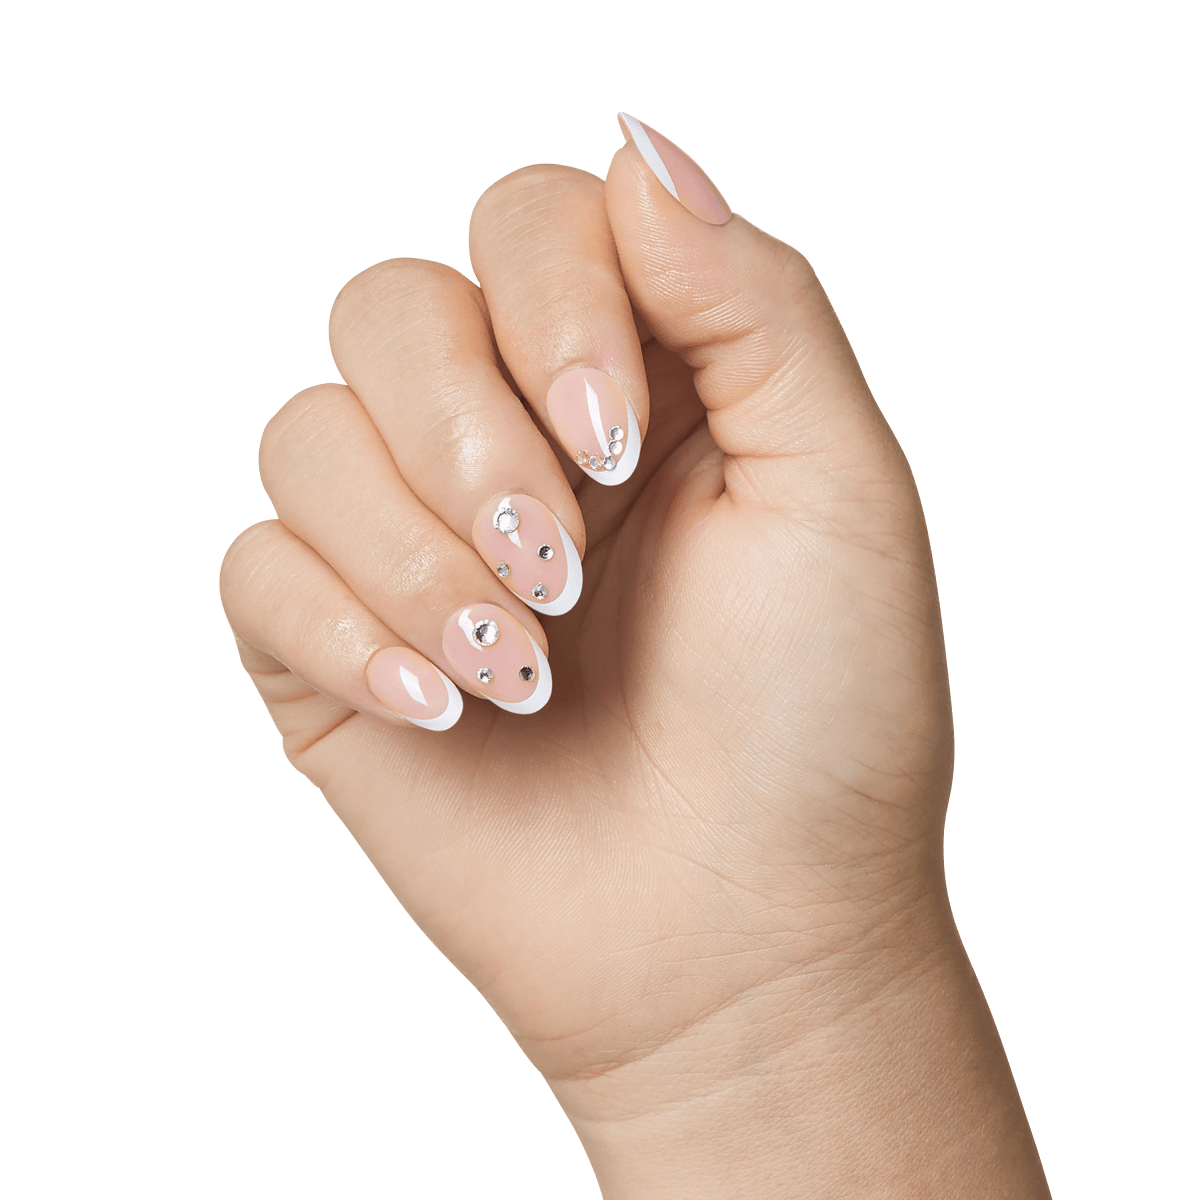 KISS Premium Classy Nails - Prevailing